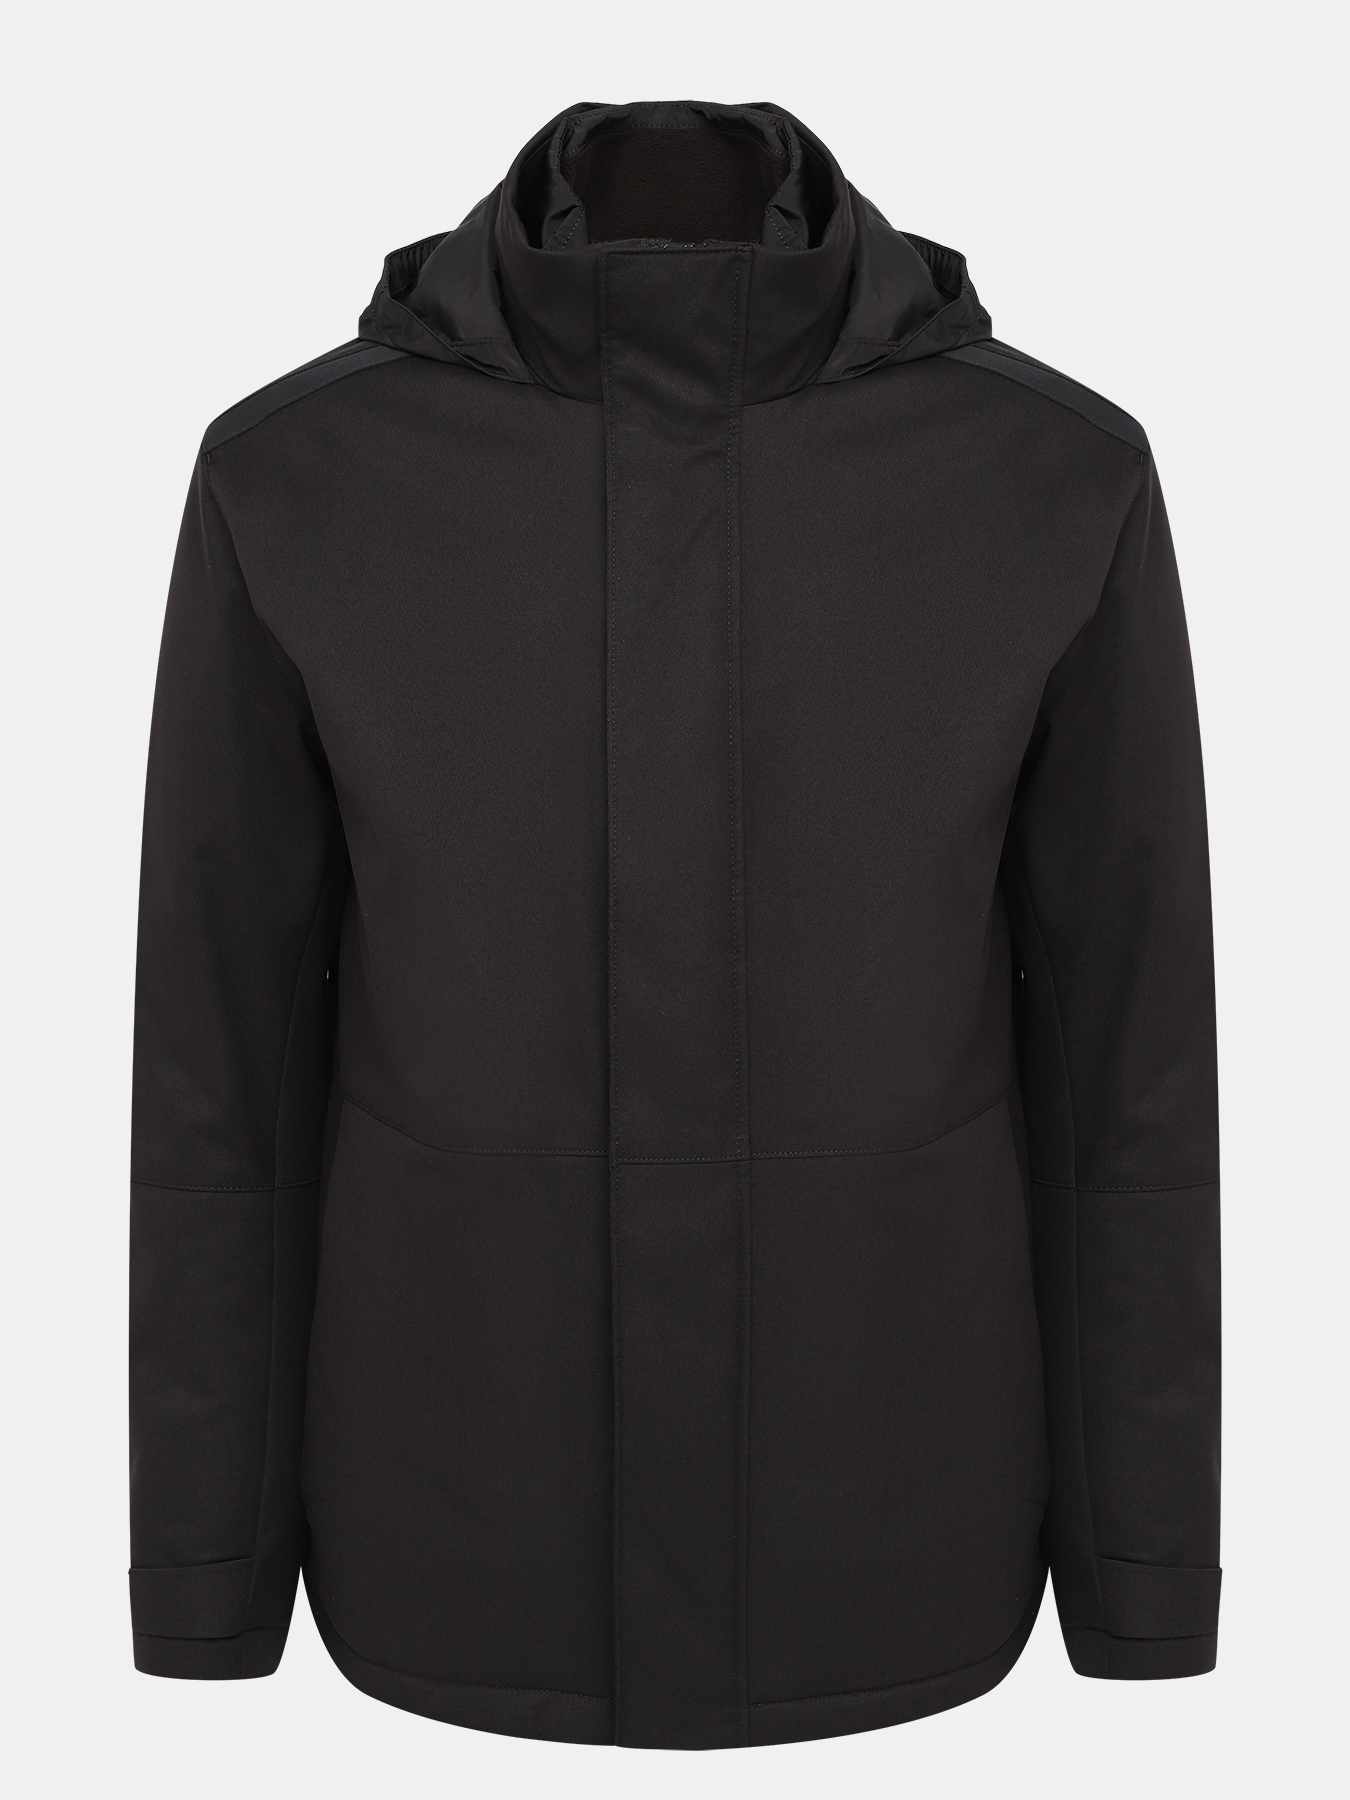 Куртка Cundel BOSS 432012-027, цвет черный, размер 52